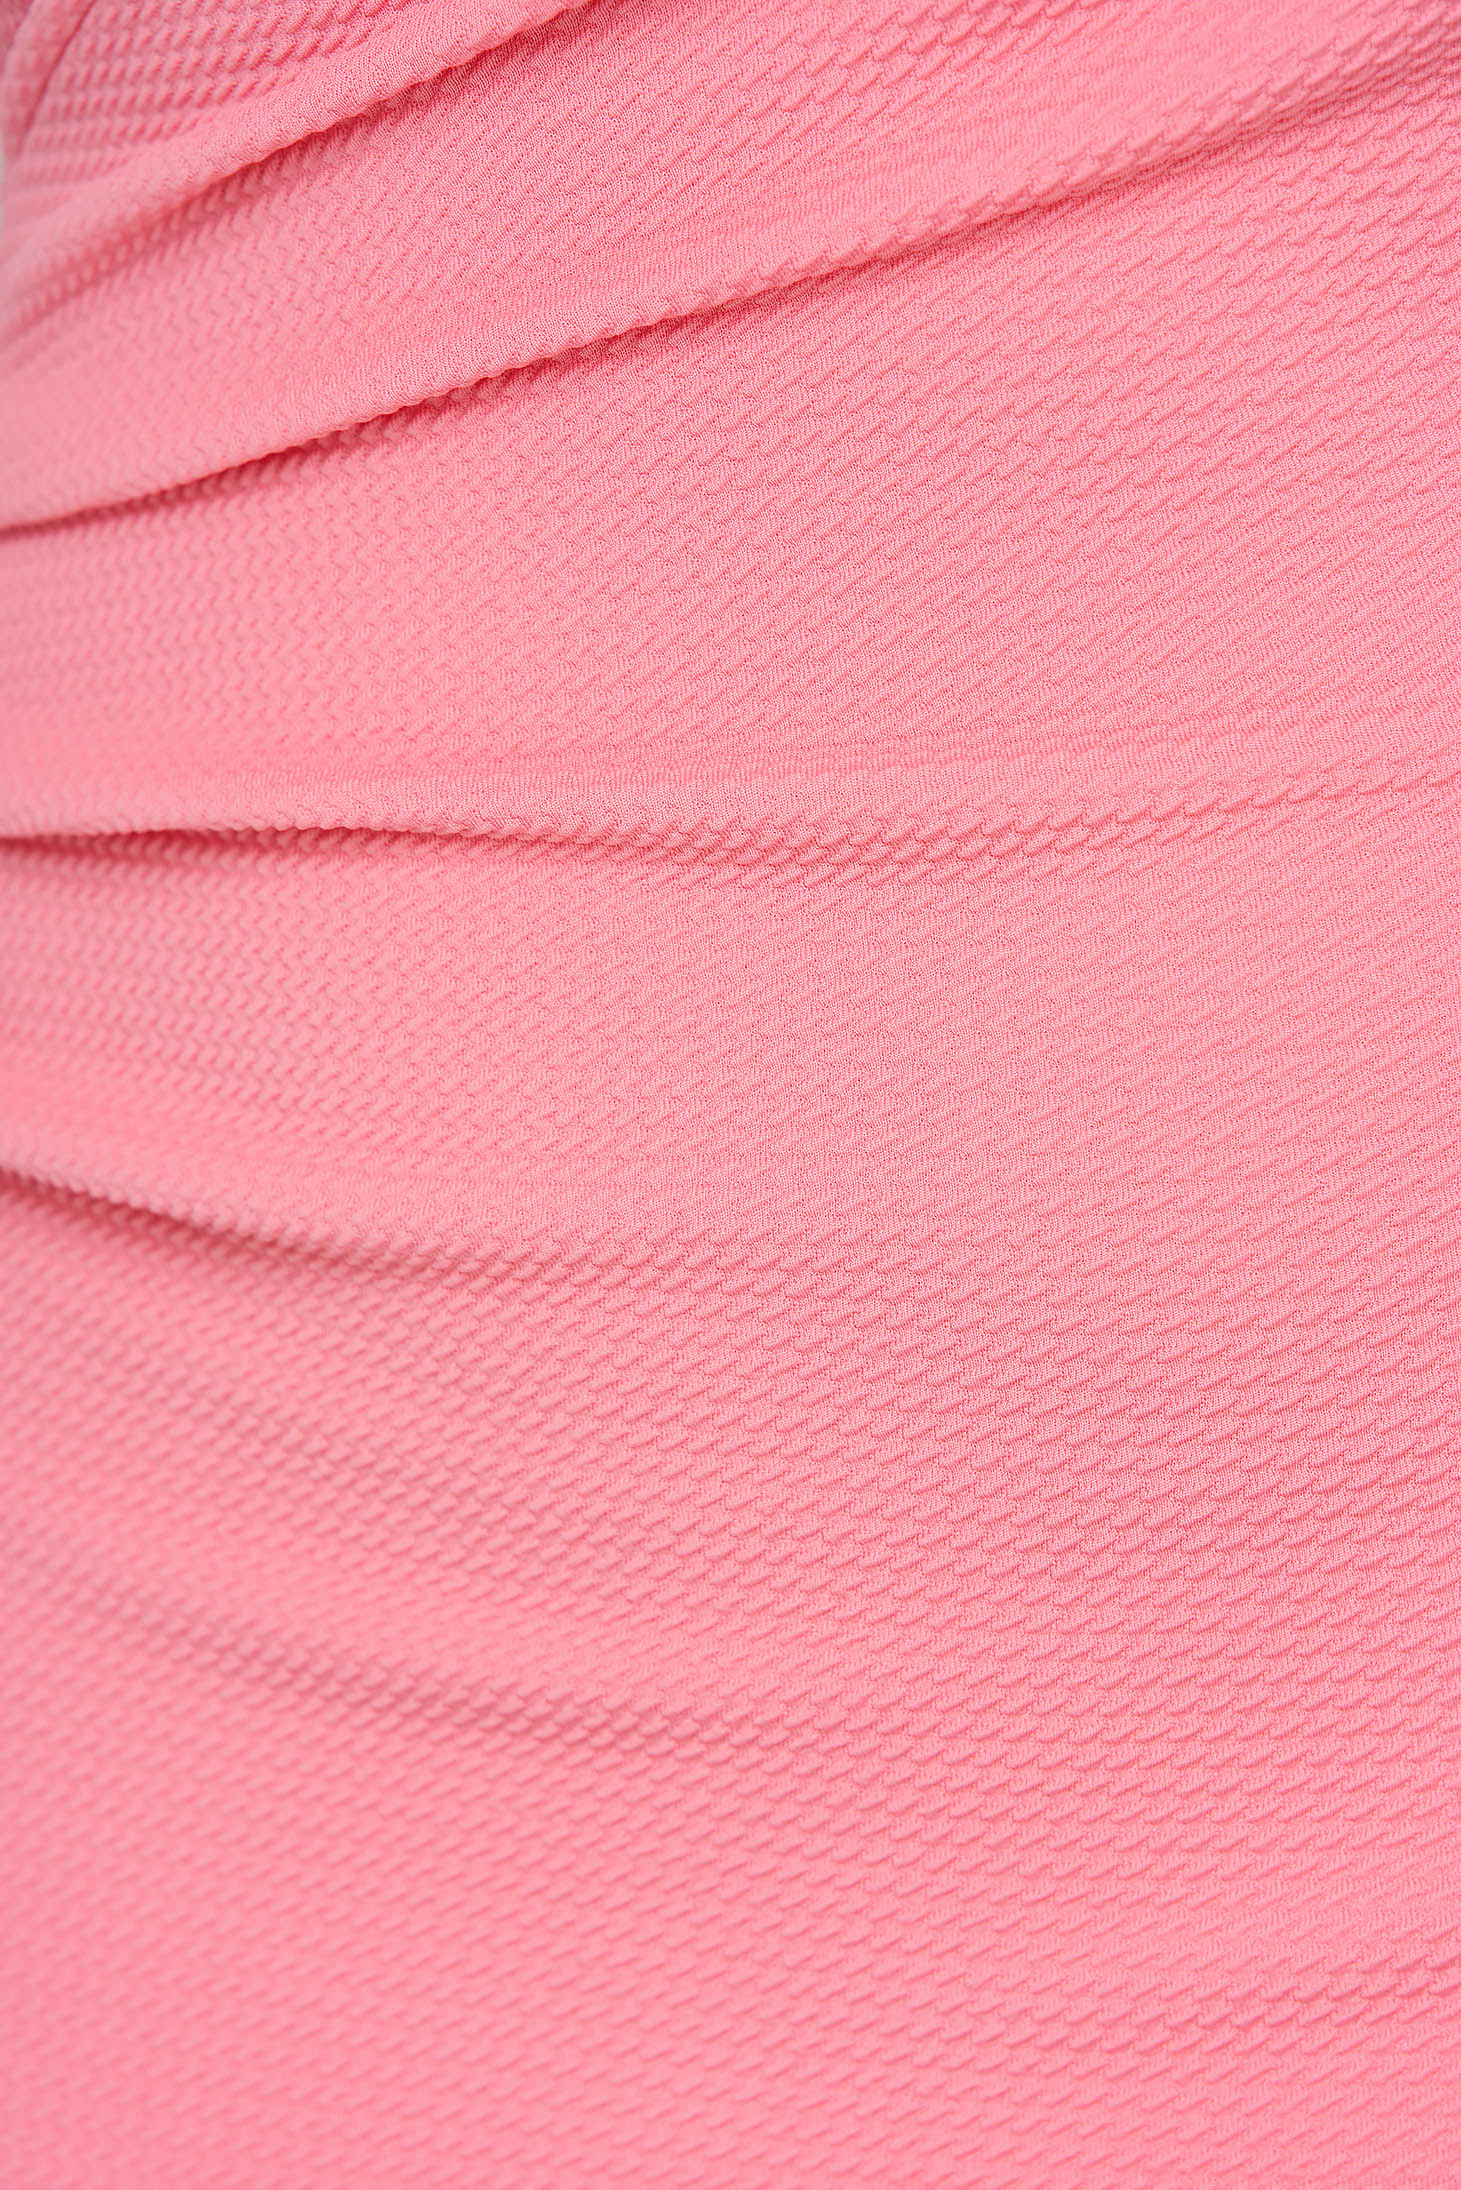 Rochie din crep texturat roz deschis midi tip creion cu decolteu petrecut - StarShinerS 4 - StarShinerS.ro